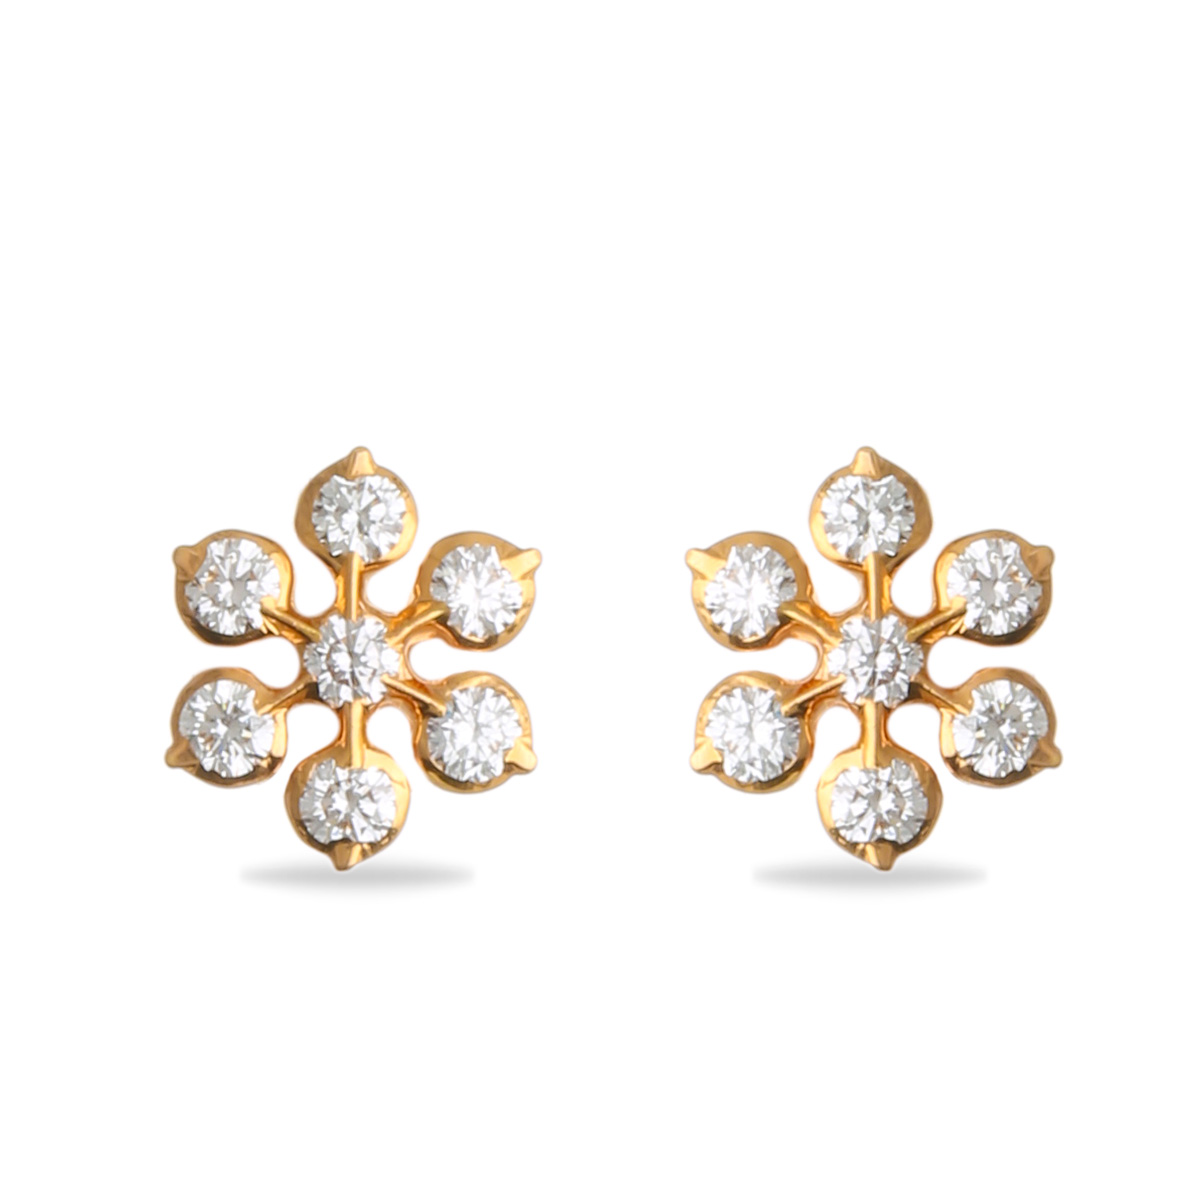 Stunning Floral Diamond Earrings